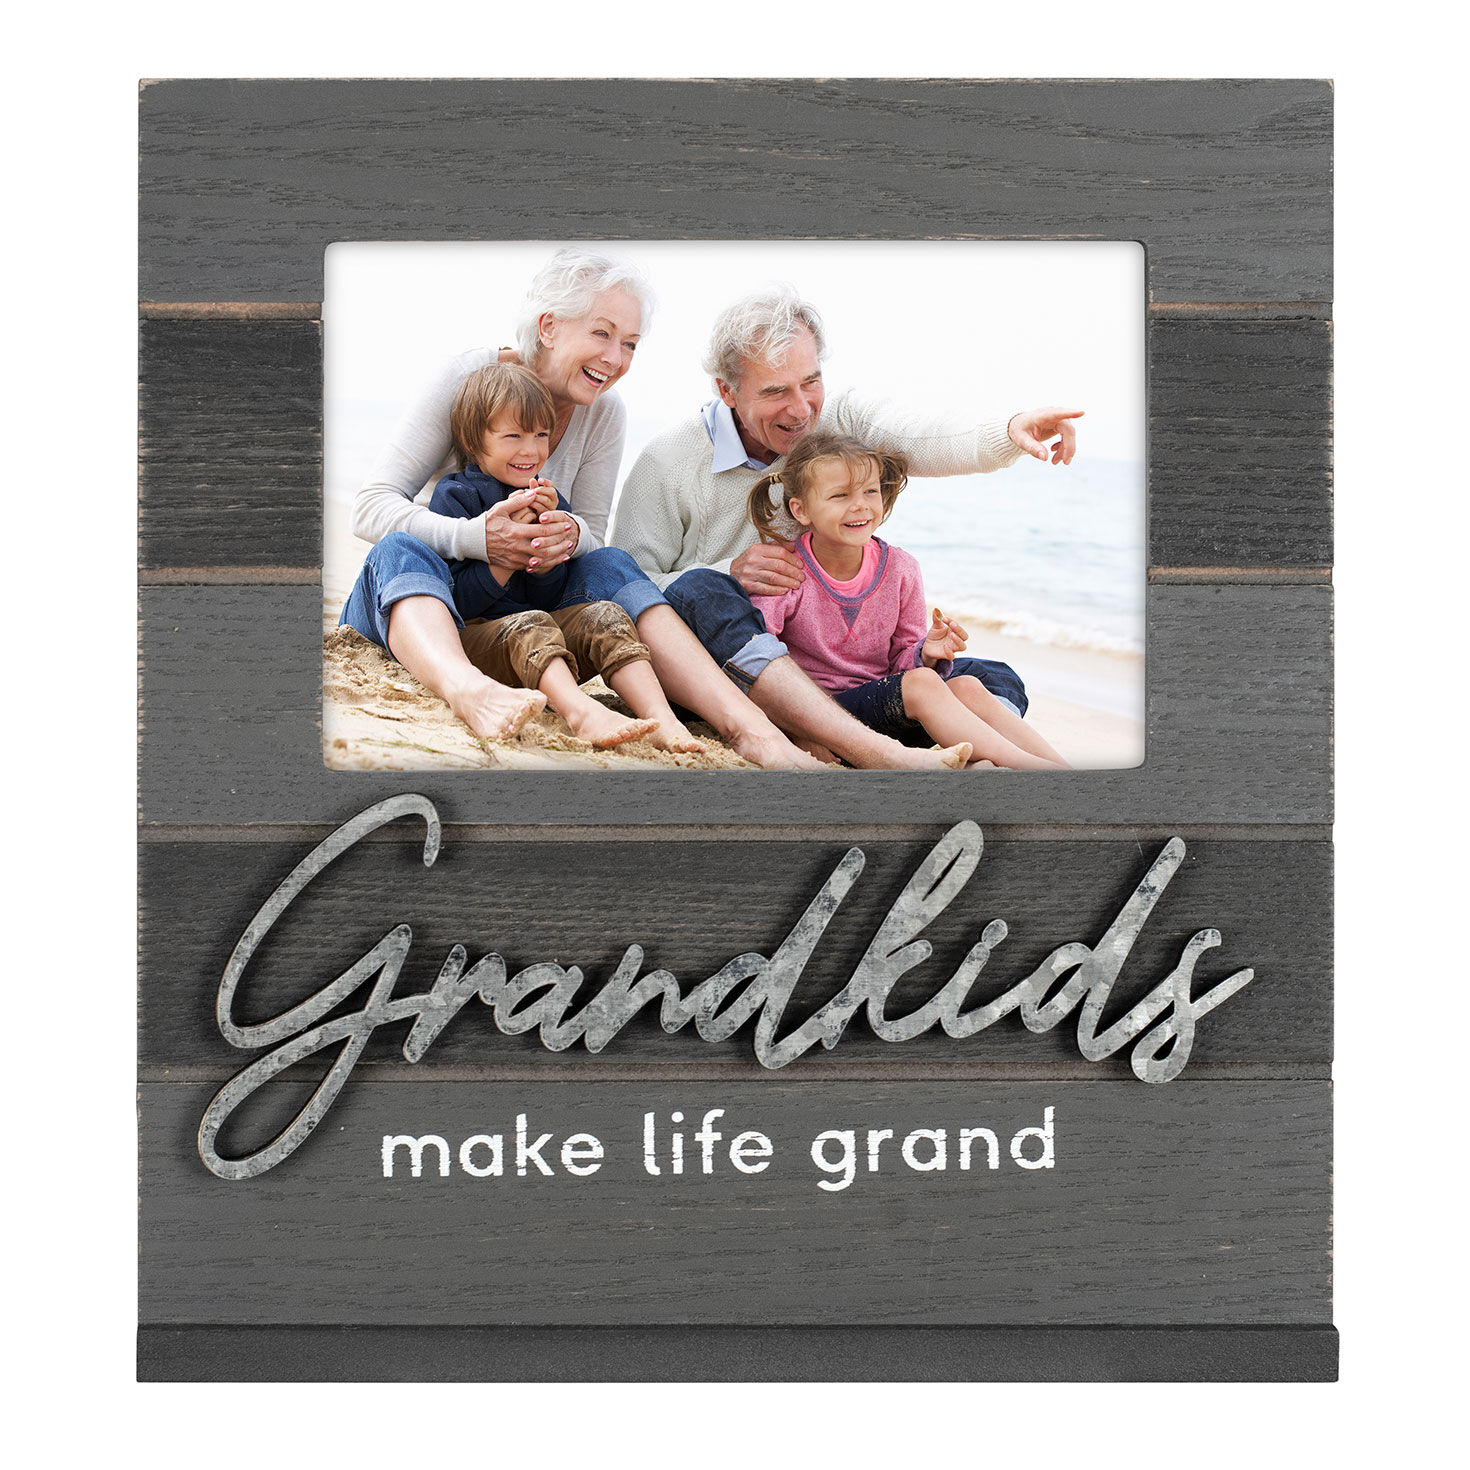 GRANDKIDS Black Wooden Photo Picture Frame Holds 4 x 6 Photo Grandparents Gift